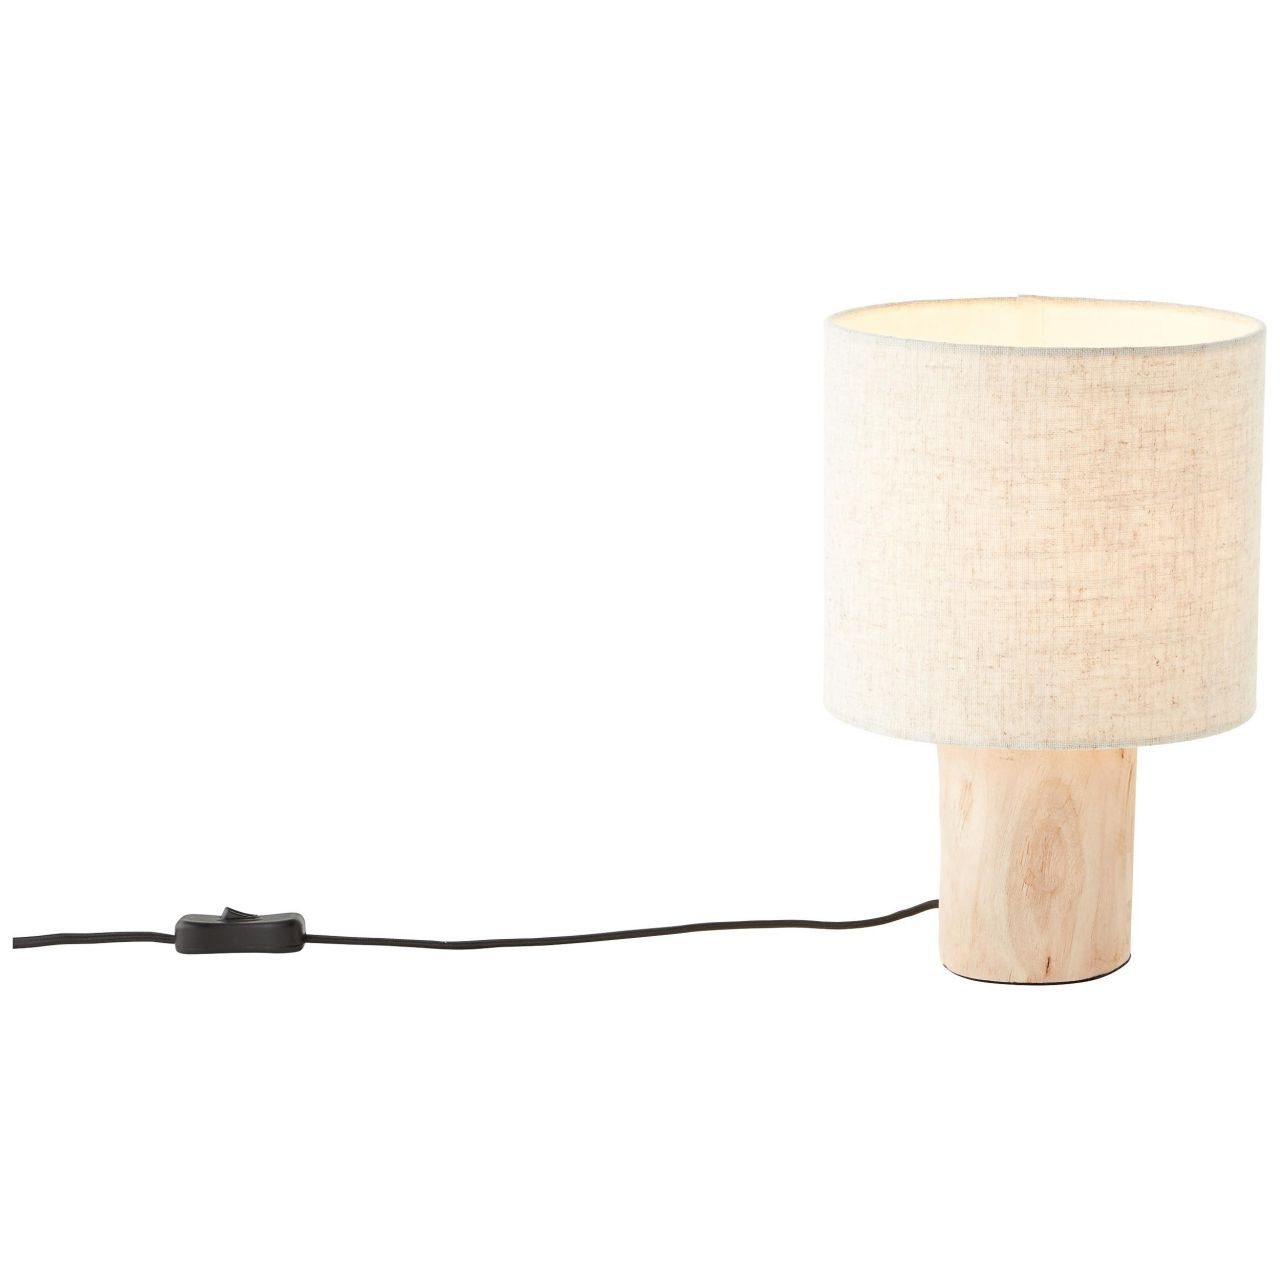 Brilliant Tischleuchte Pia, Lampe, Pia Tischleuchte nachhaltiger E27, 1x A60, natur, aus Holz 40W